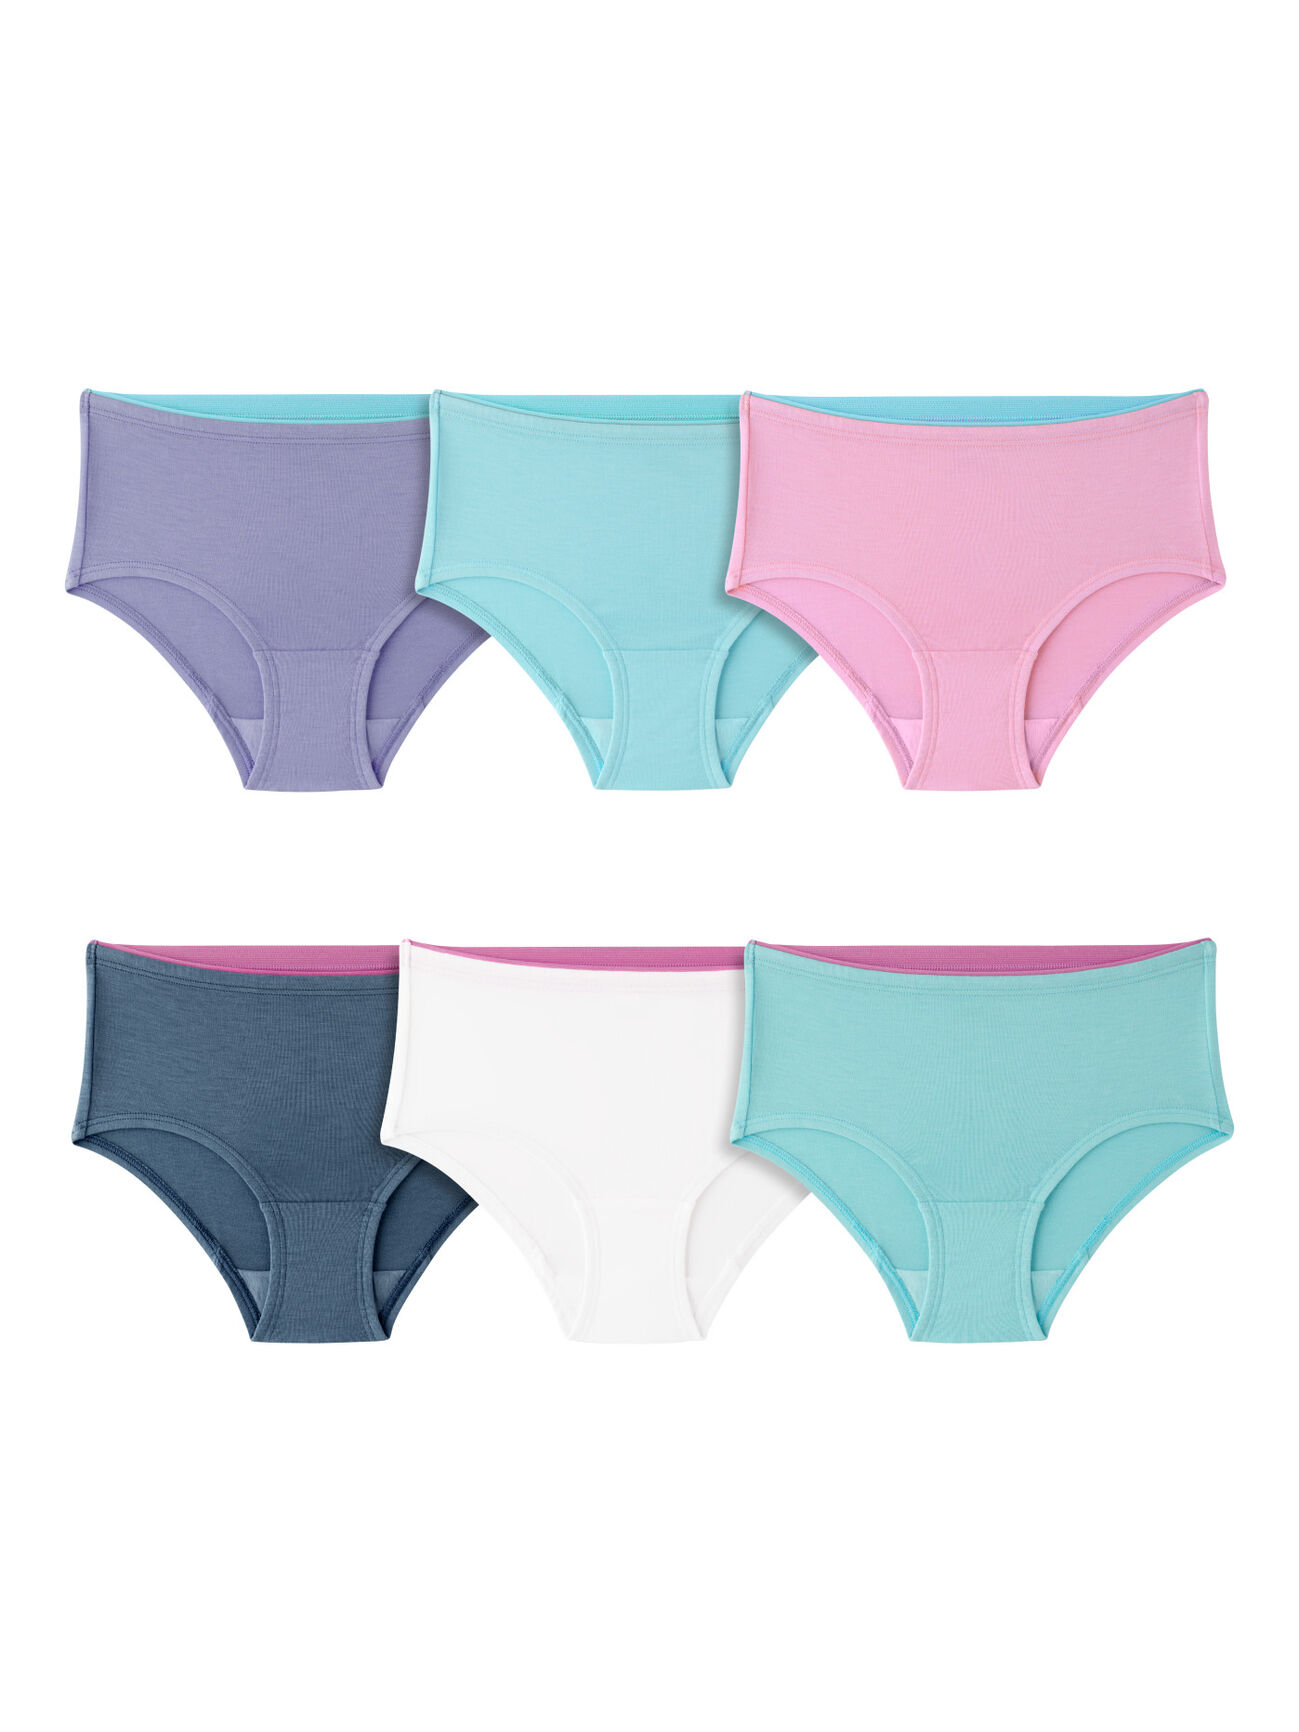 Essentials Women's Thong Underwear, Pack of 6, - Import It